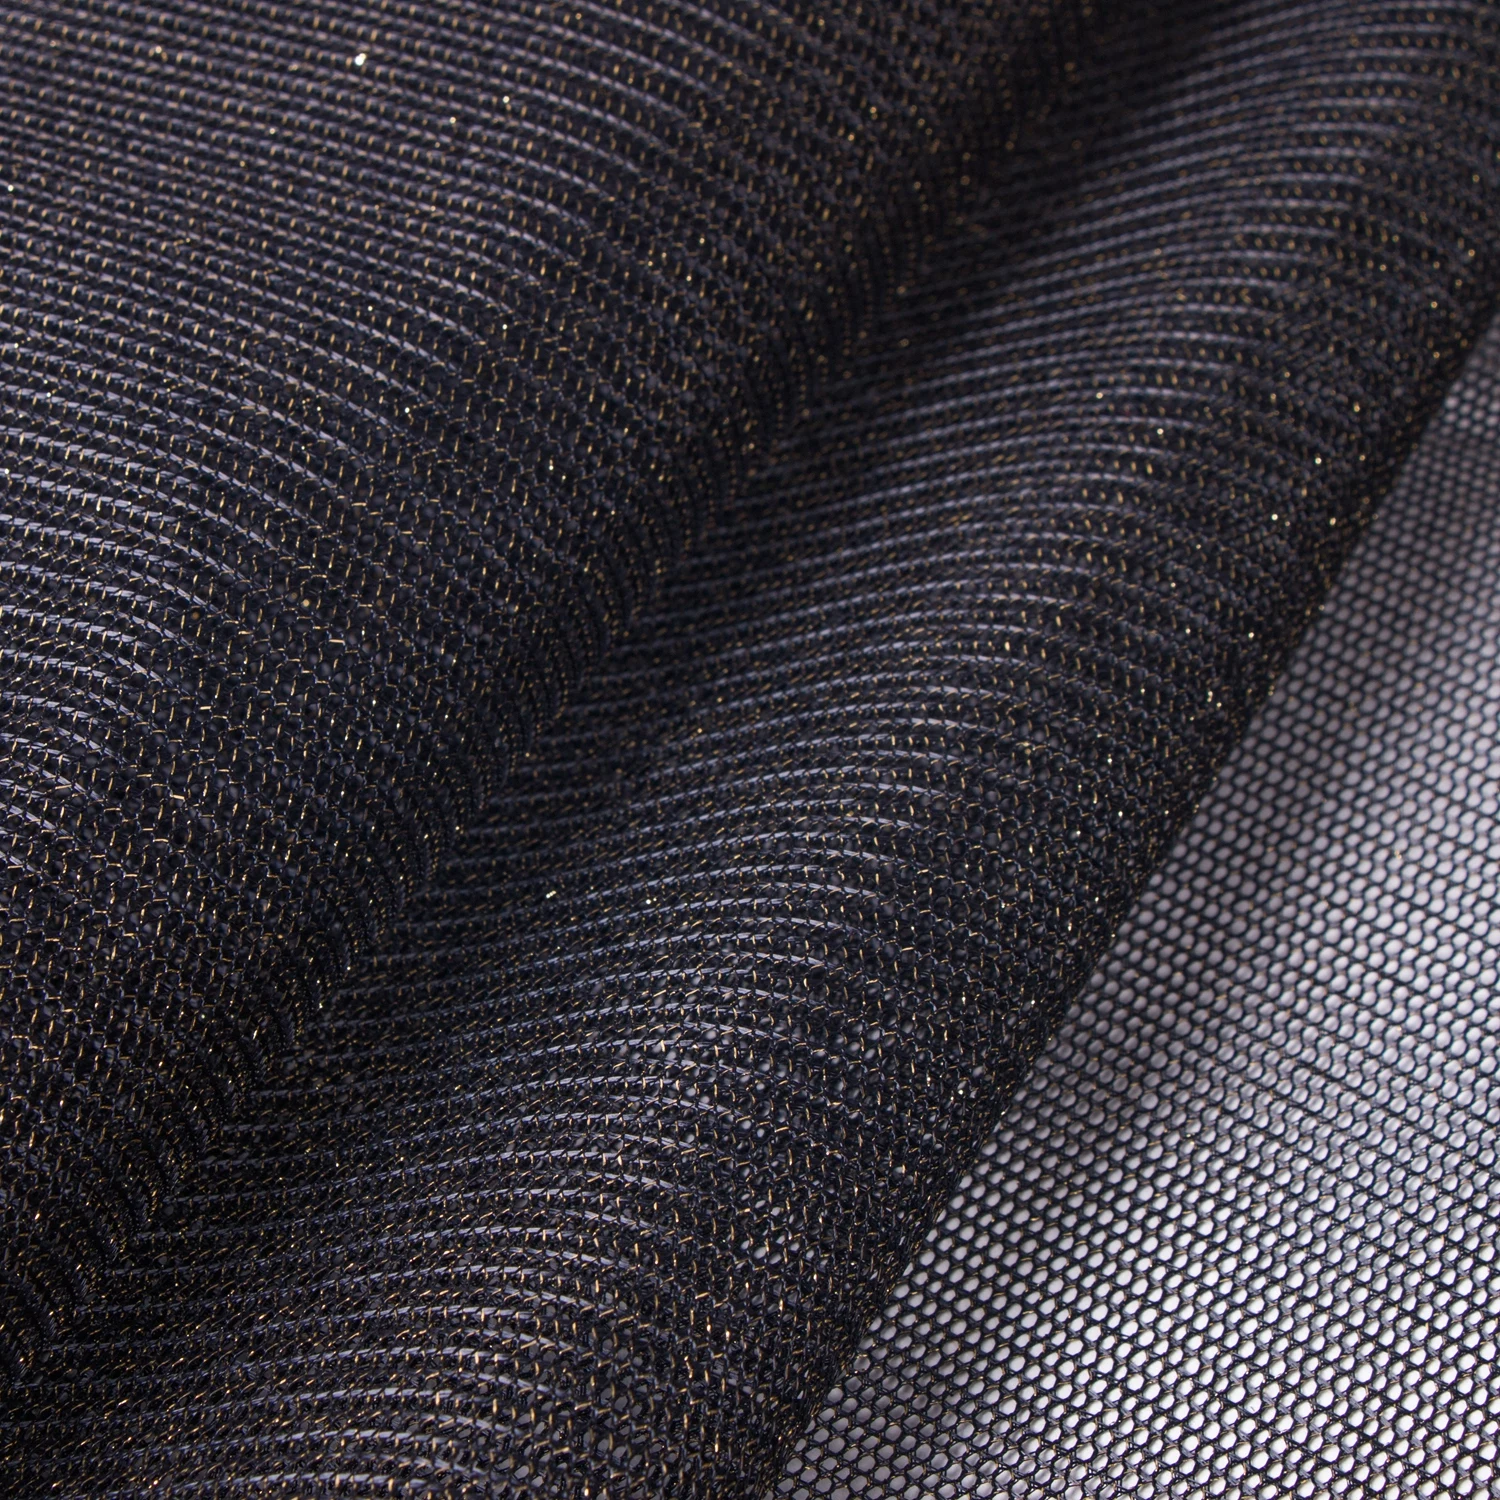 75d Hexagonal Hard Mesh 100%nylon Hard Tulle Net Fabric - Buy Hard Mesh ...